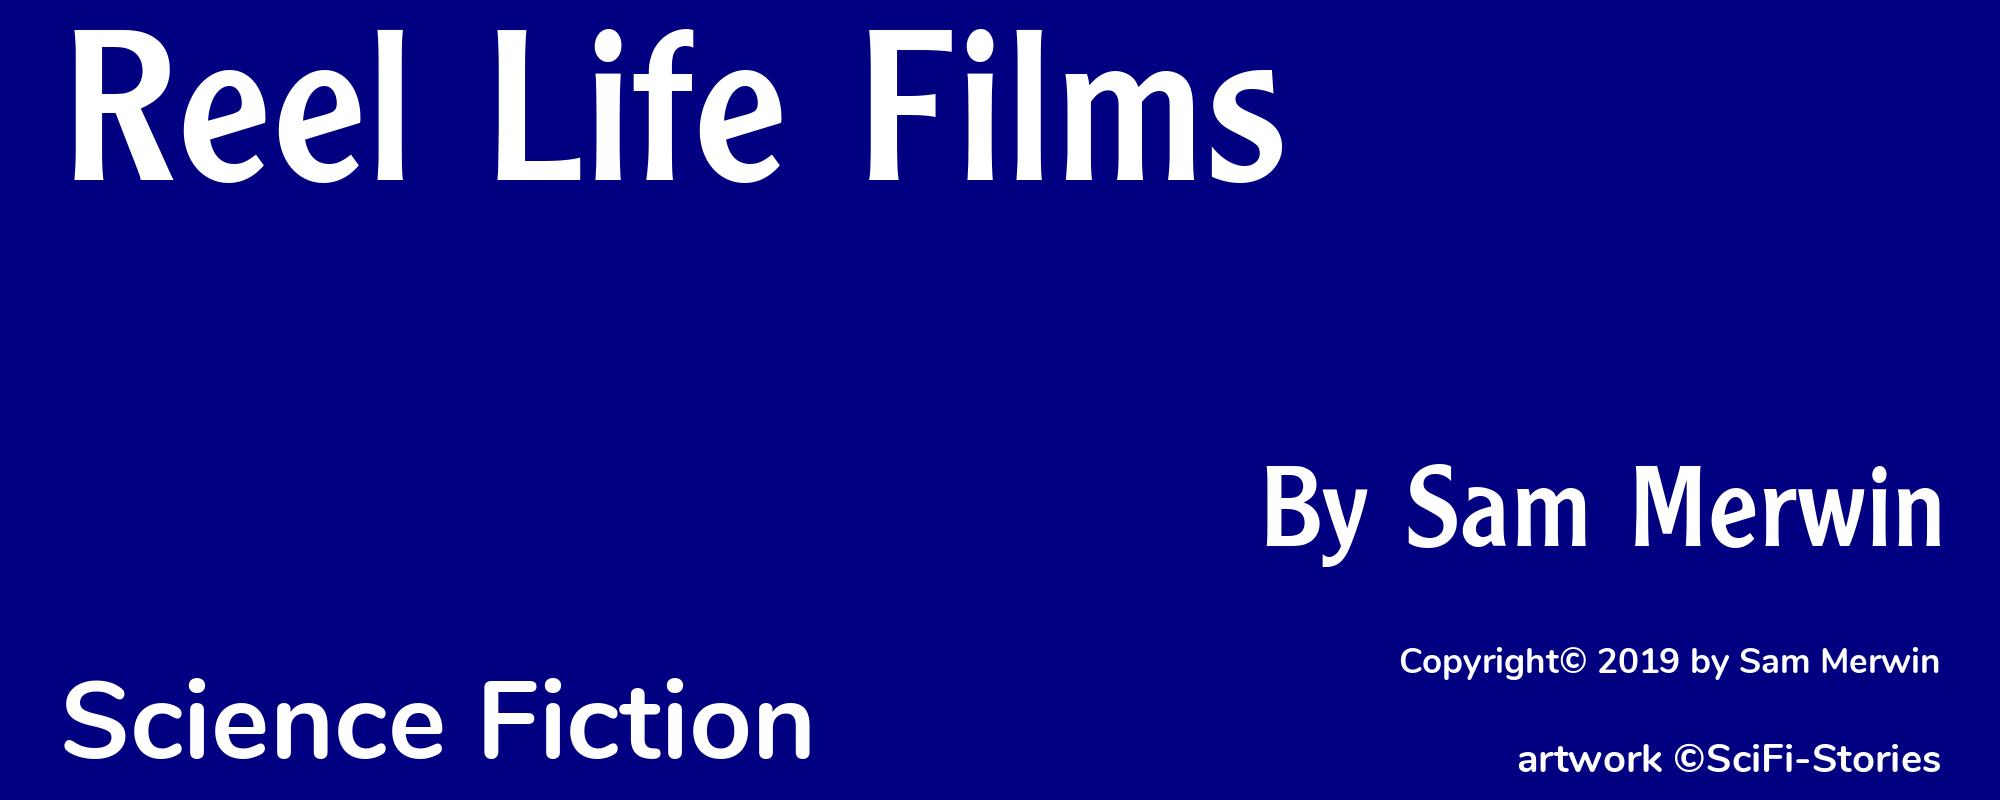 Reel Life Films - Cover